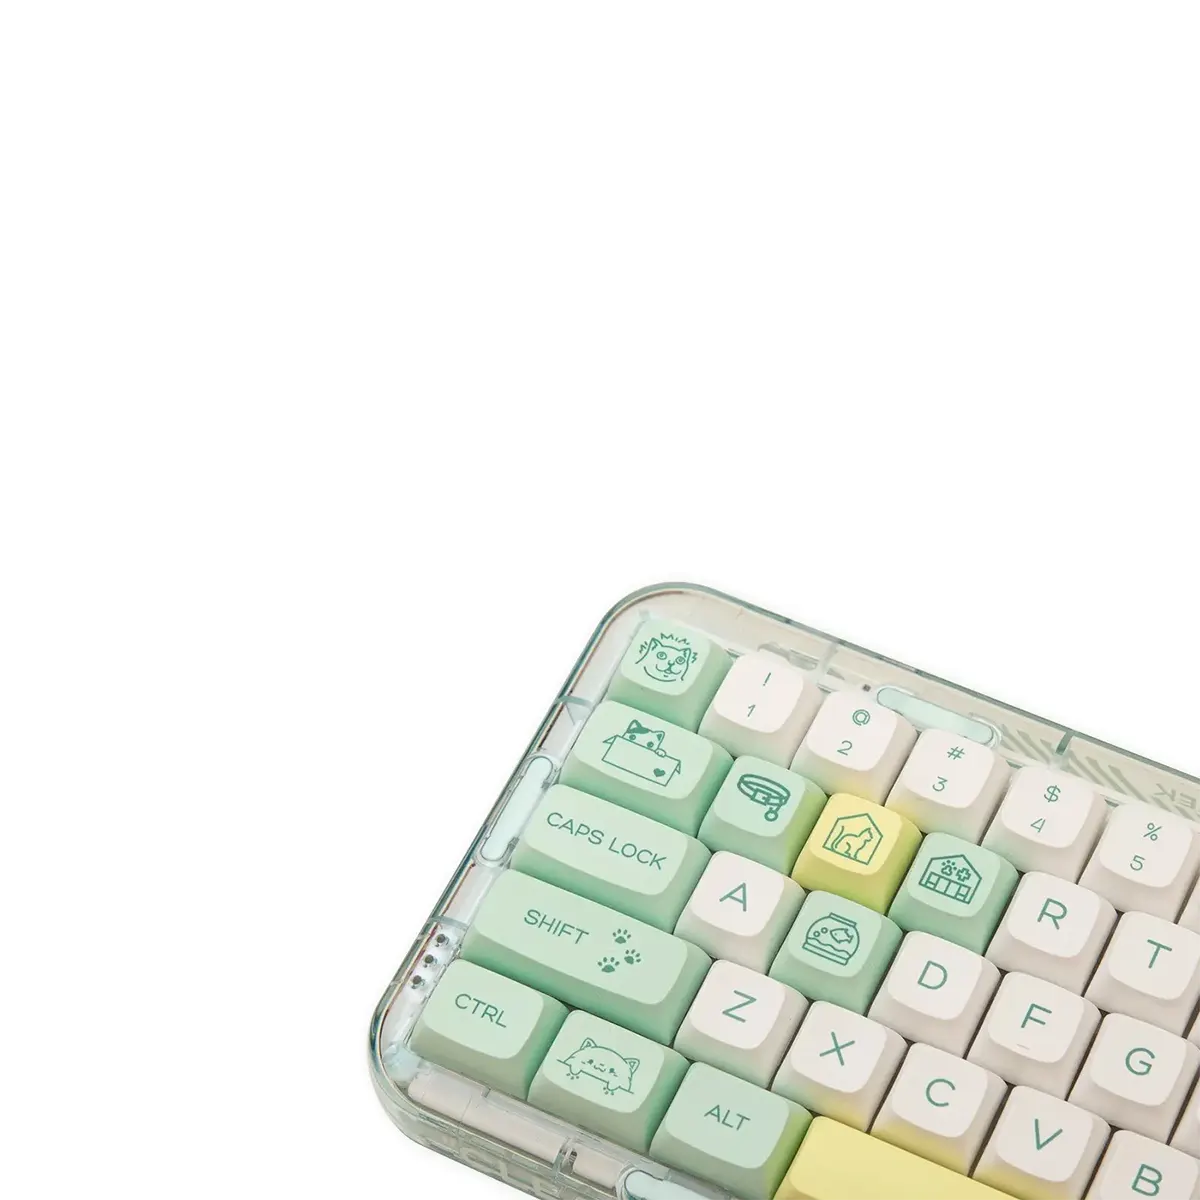 keycap for mechnical keyboard